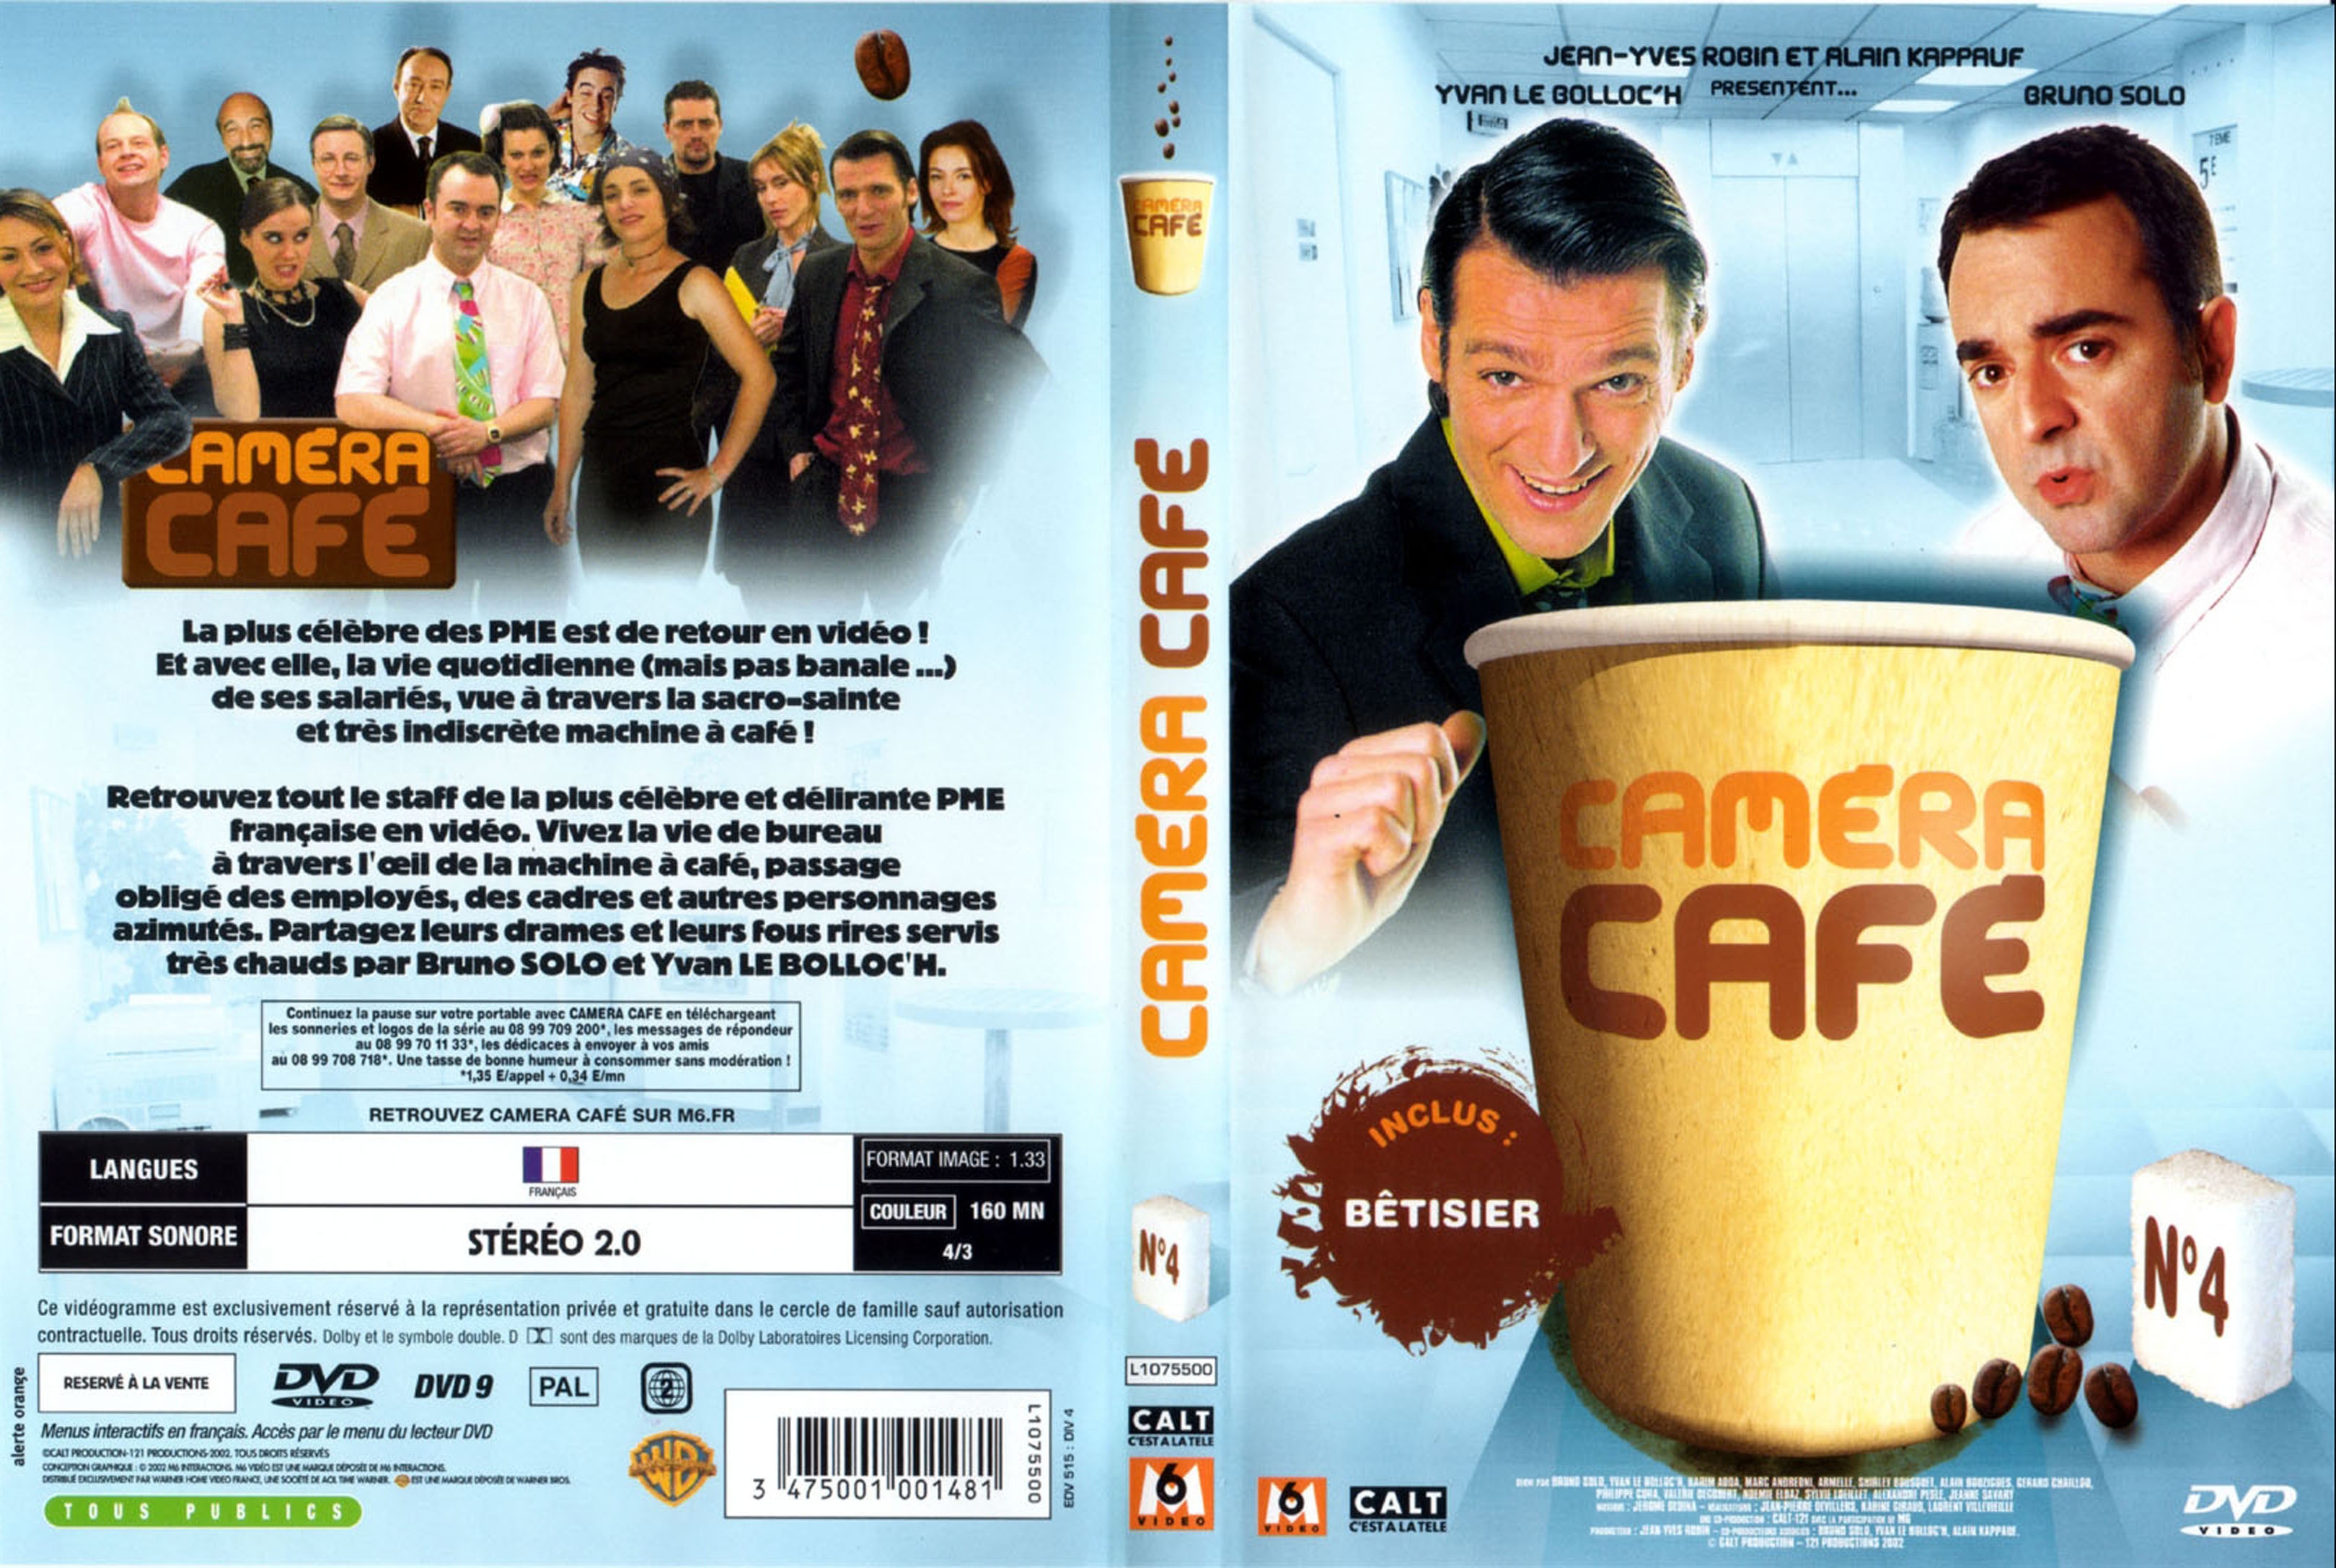 Jaquette DVD Camera cafe vol 4